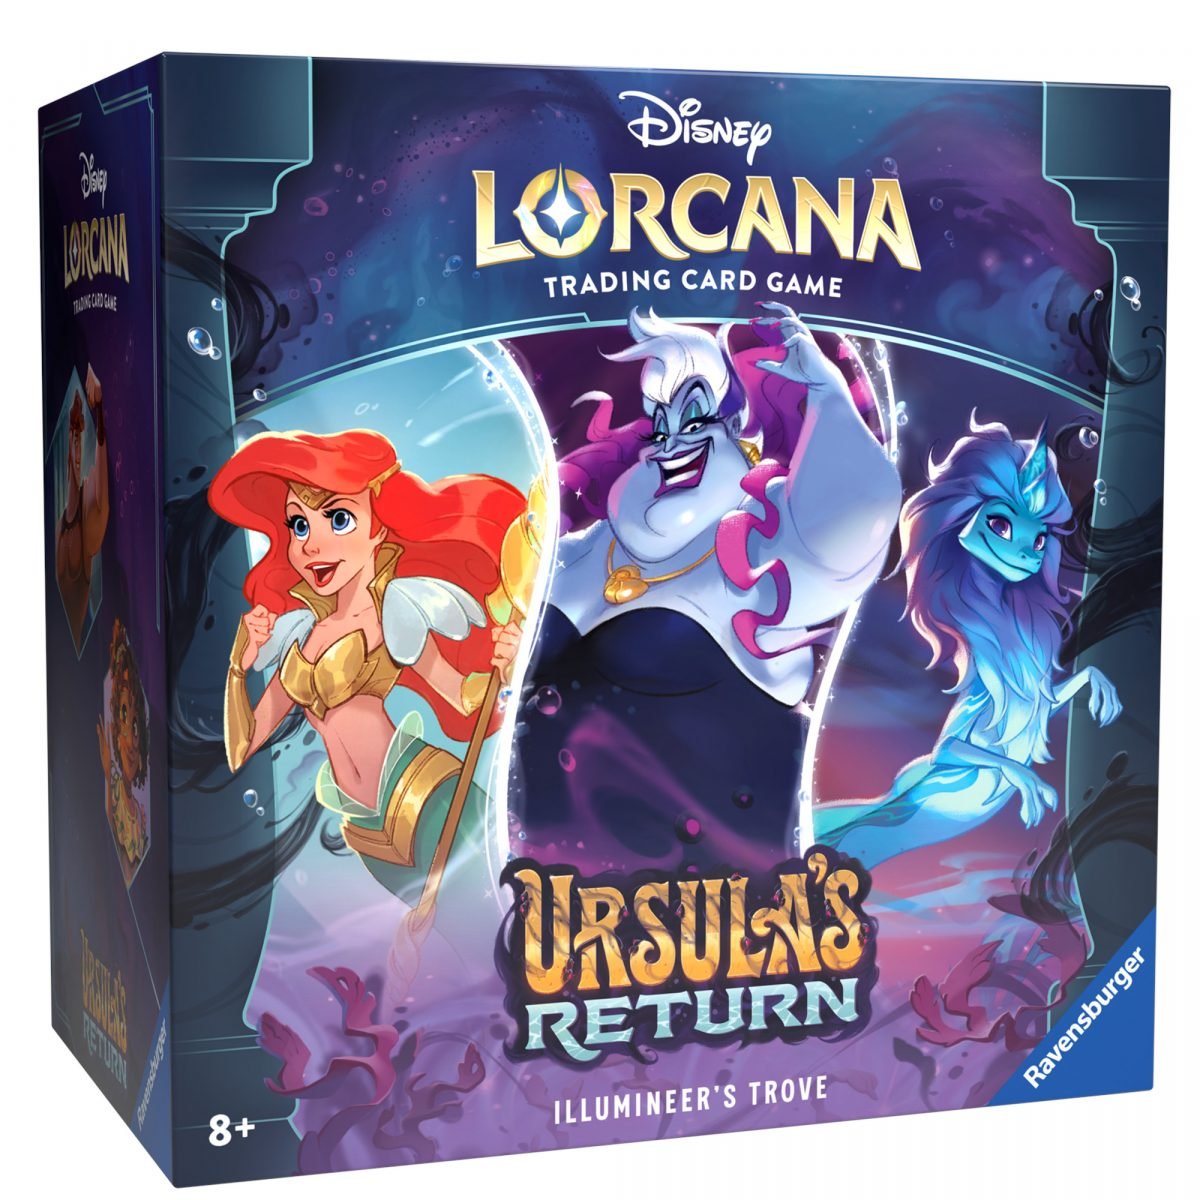 The front of the box for Disney Lorcana: Ursula's Return Illumineer's Trove featuring Ariel, Ursula, and Sisu